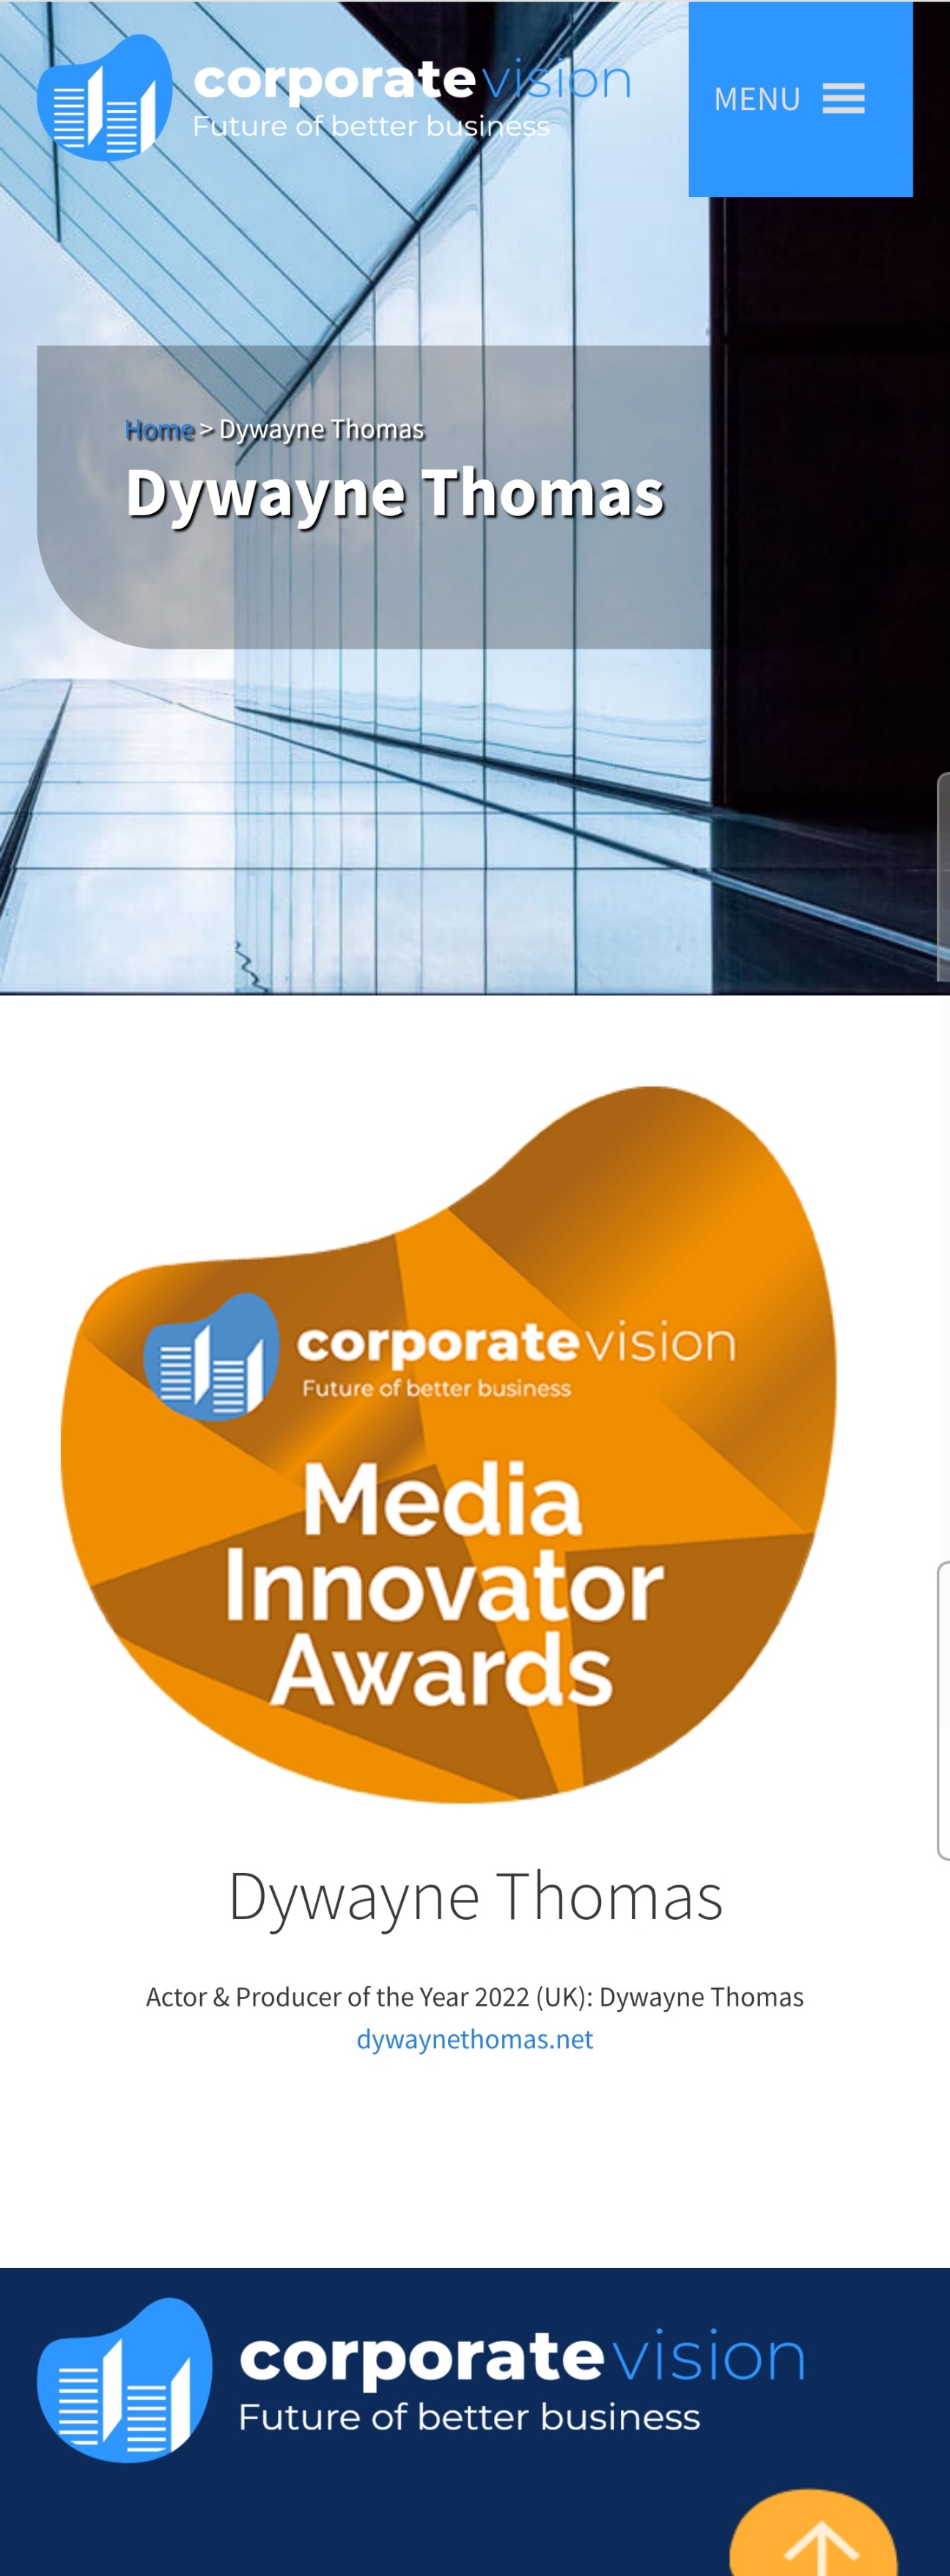 Media Innovator Awards - Actor & Producer of the Year 2022